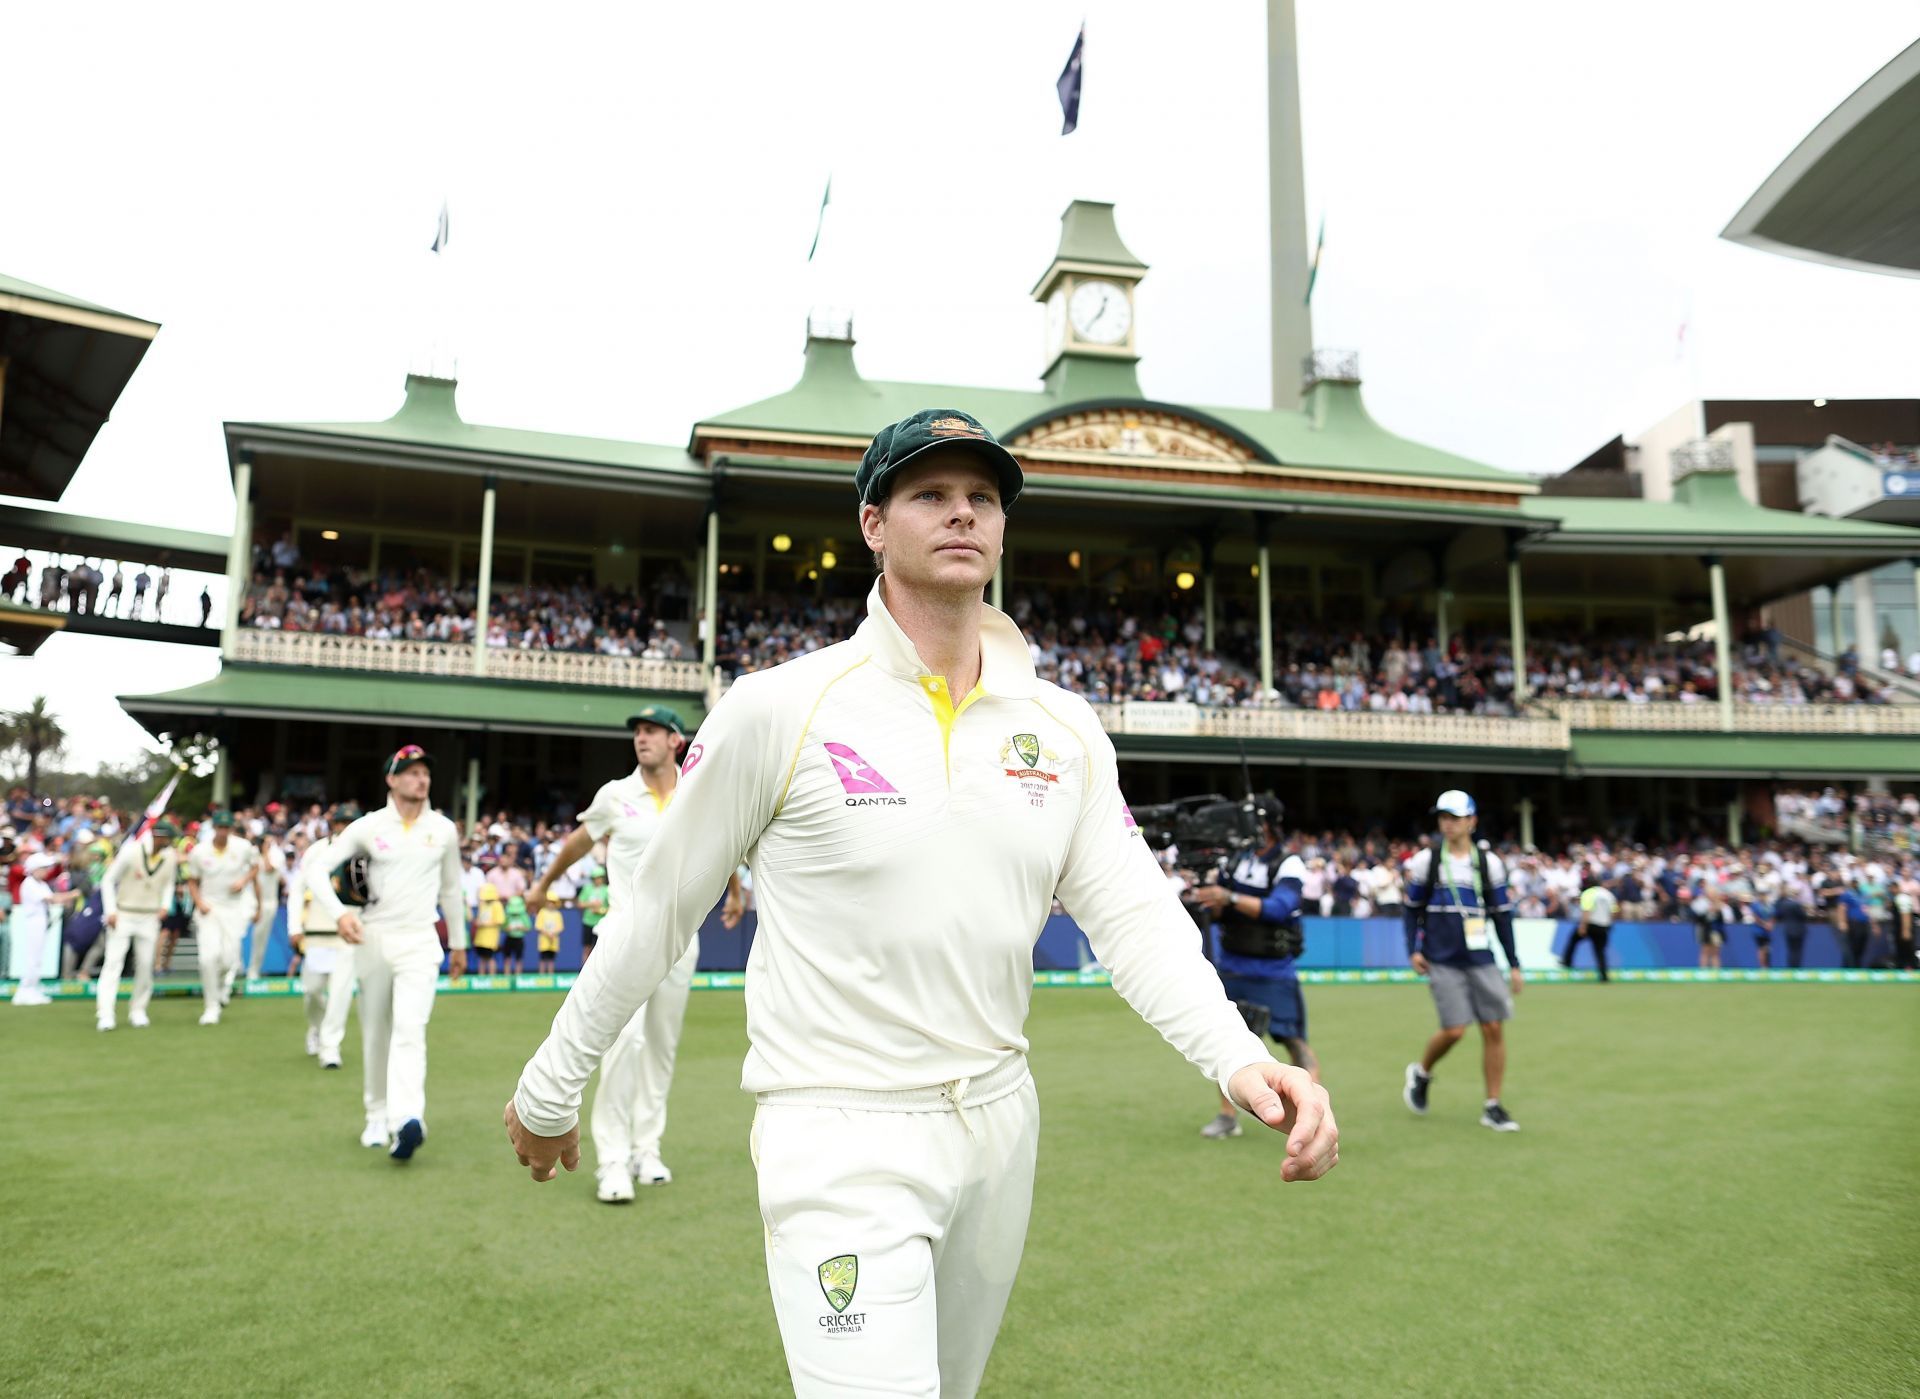 Australia v England - Fifth Test: Day 1